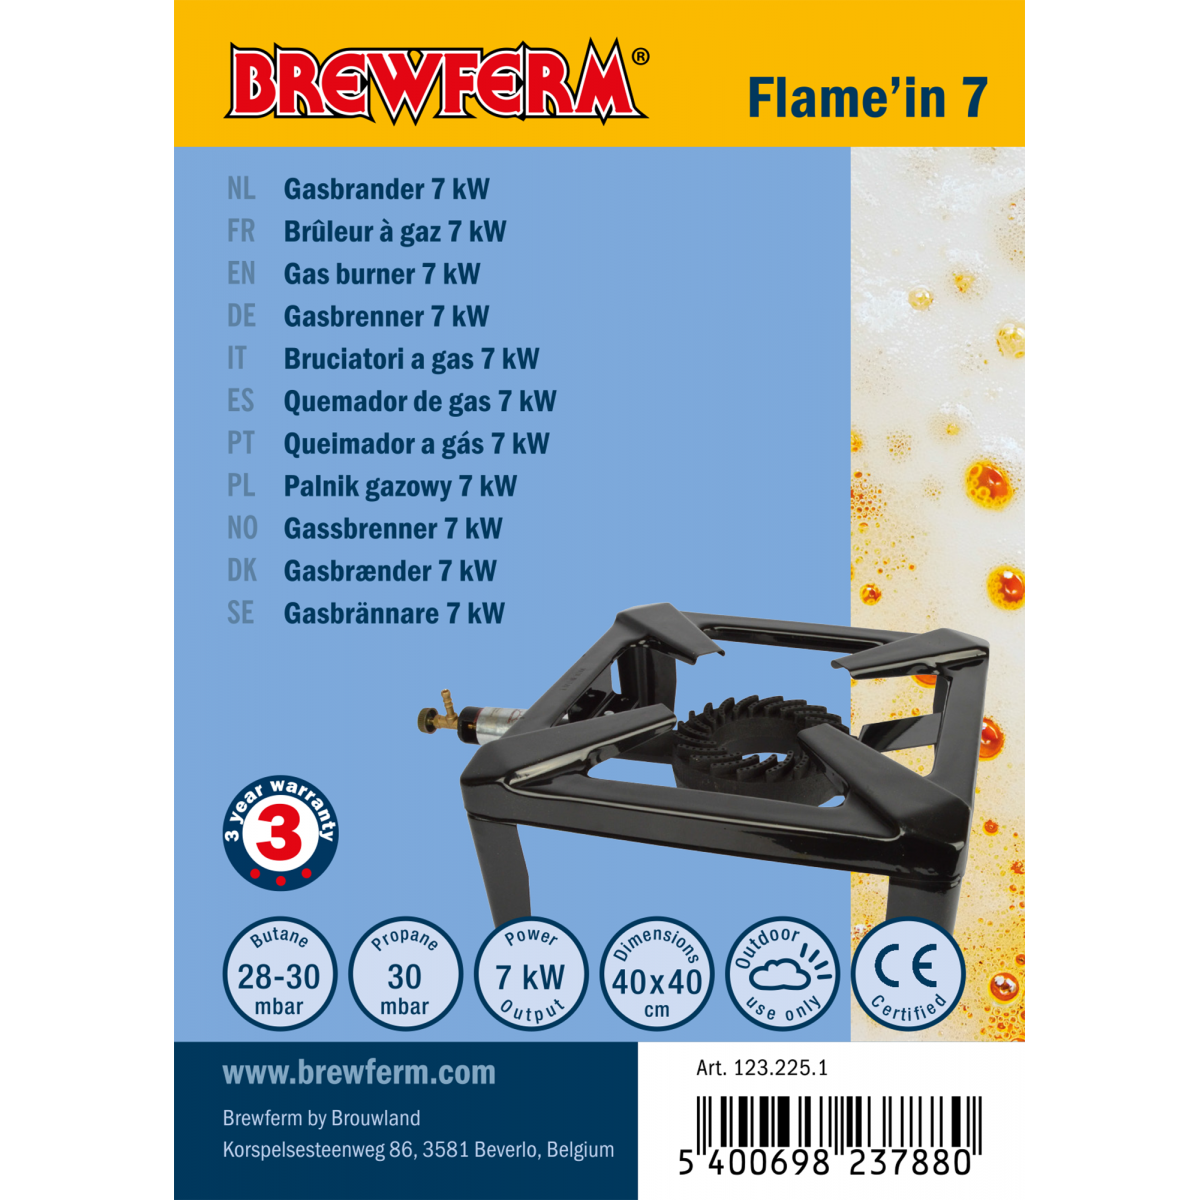 Brewferm gas burner Flame'in 7